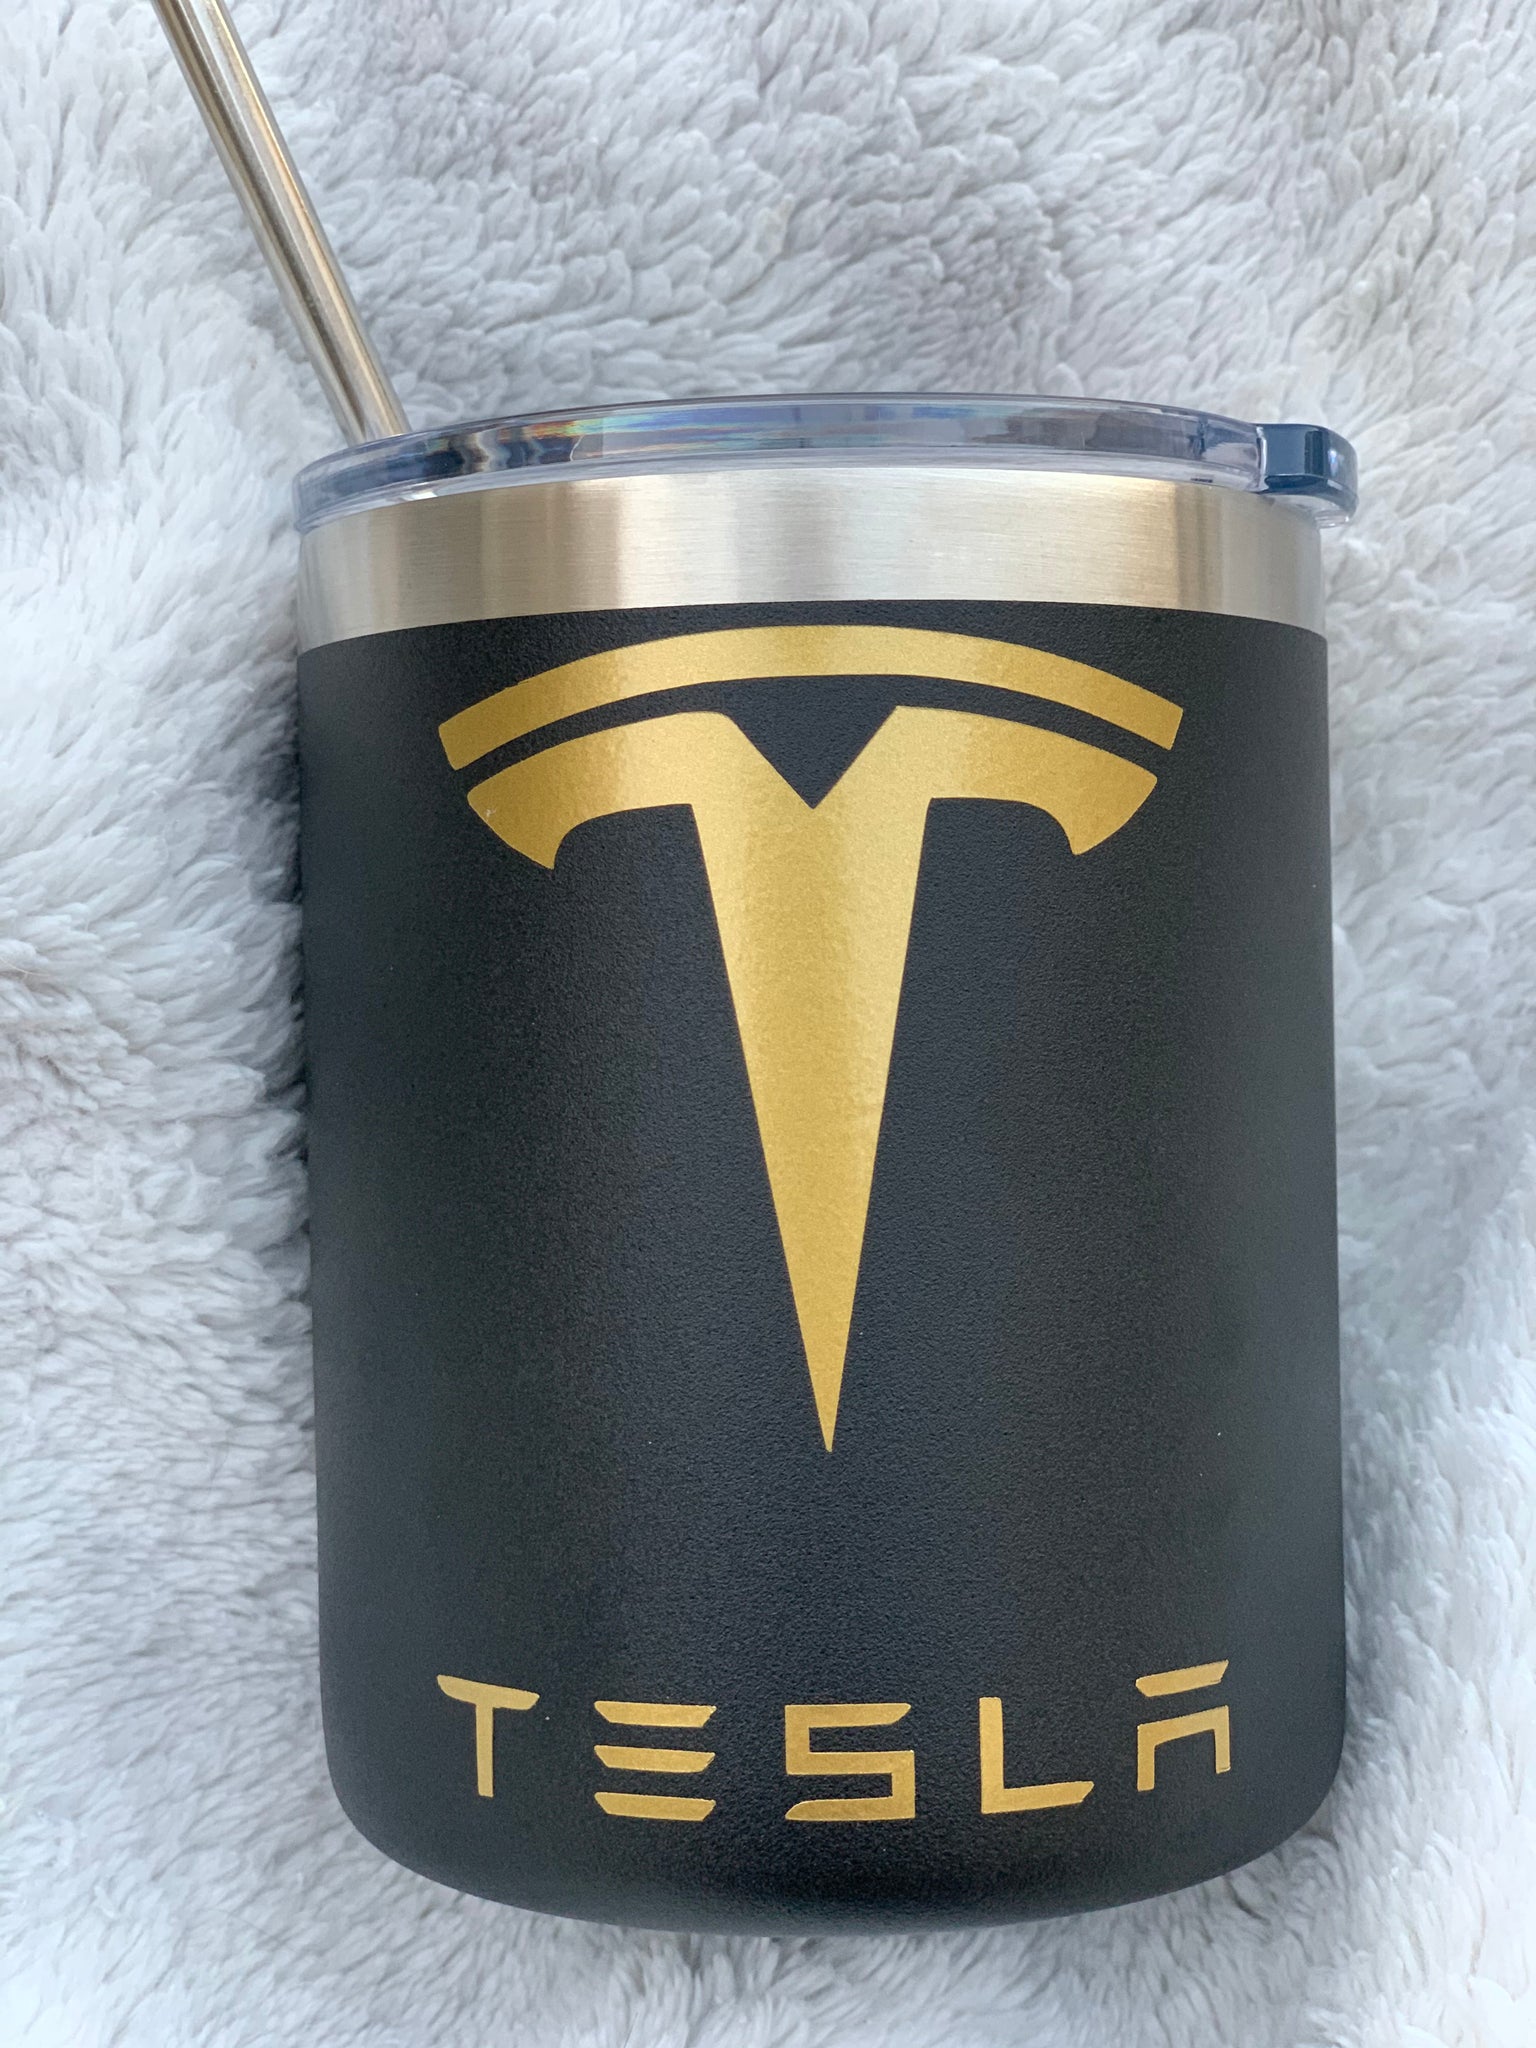 Personalized Tesla Insulated Tumbler Black White Blue Red or Stainless Tesla  Coffee Cup Tesla Mug 20 Oz Tesla Tumbler Tesla Cup 